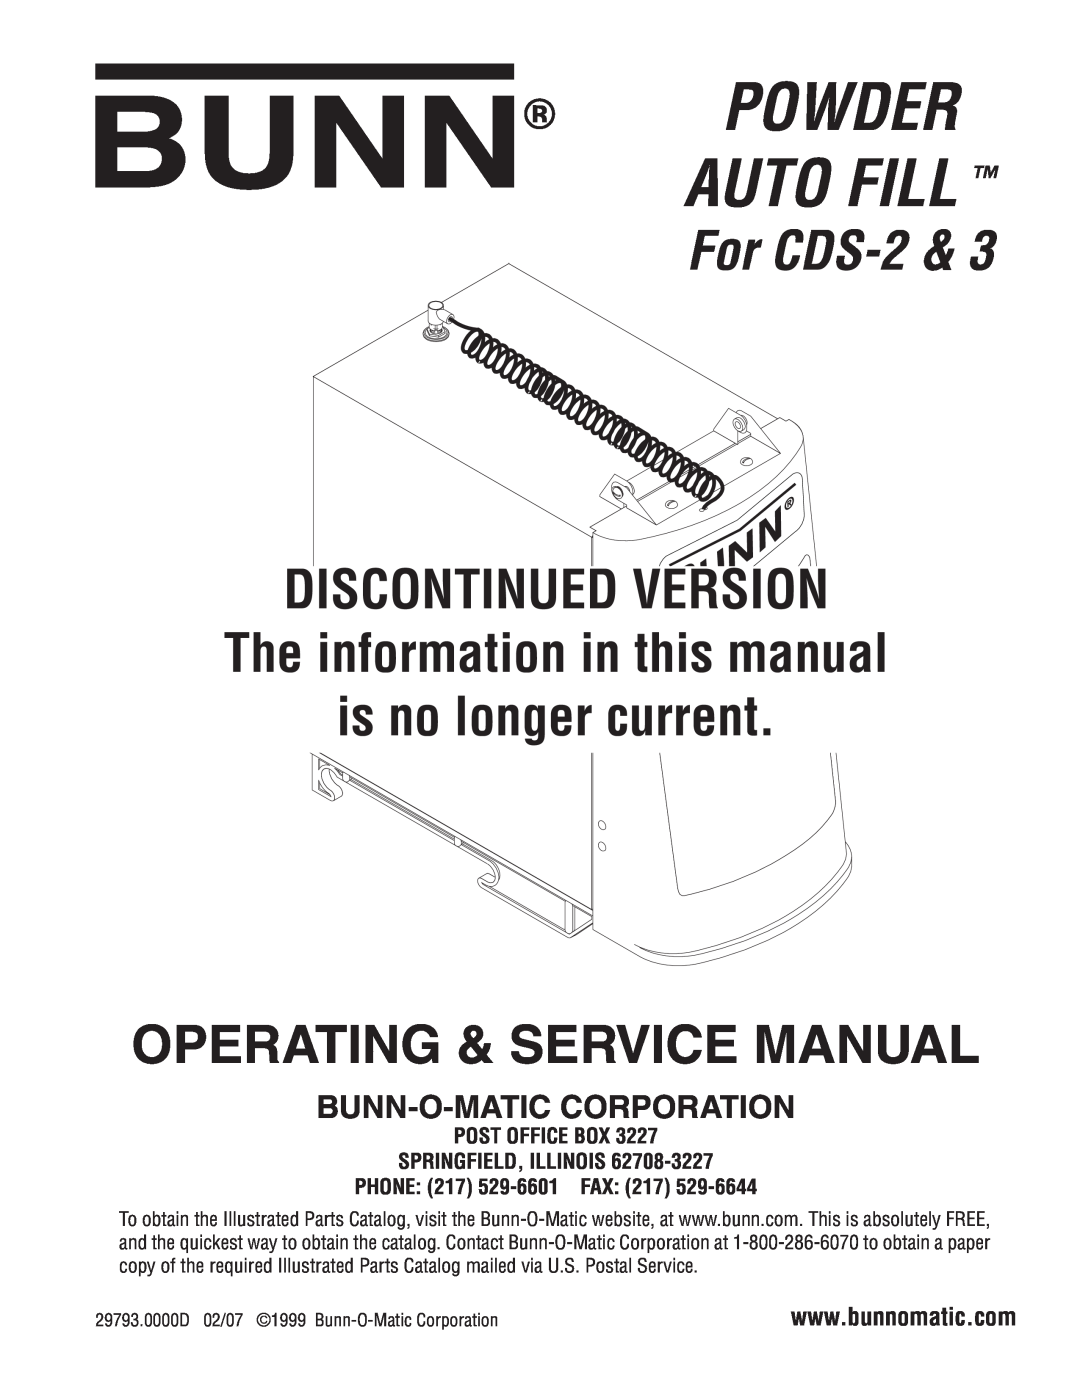 Bunn service manual POST OFFICE BOX SPRINGFIELD, ILLINOIS PHONE 217 529-6601 FAX, Powder Bunn Auto Fill, For CDS-2 